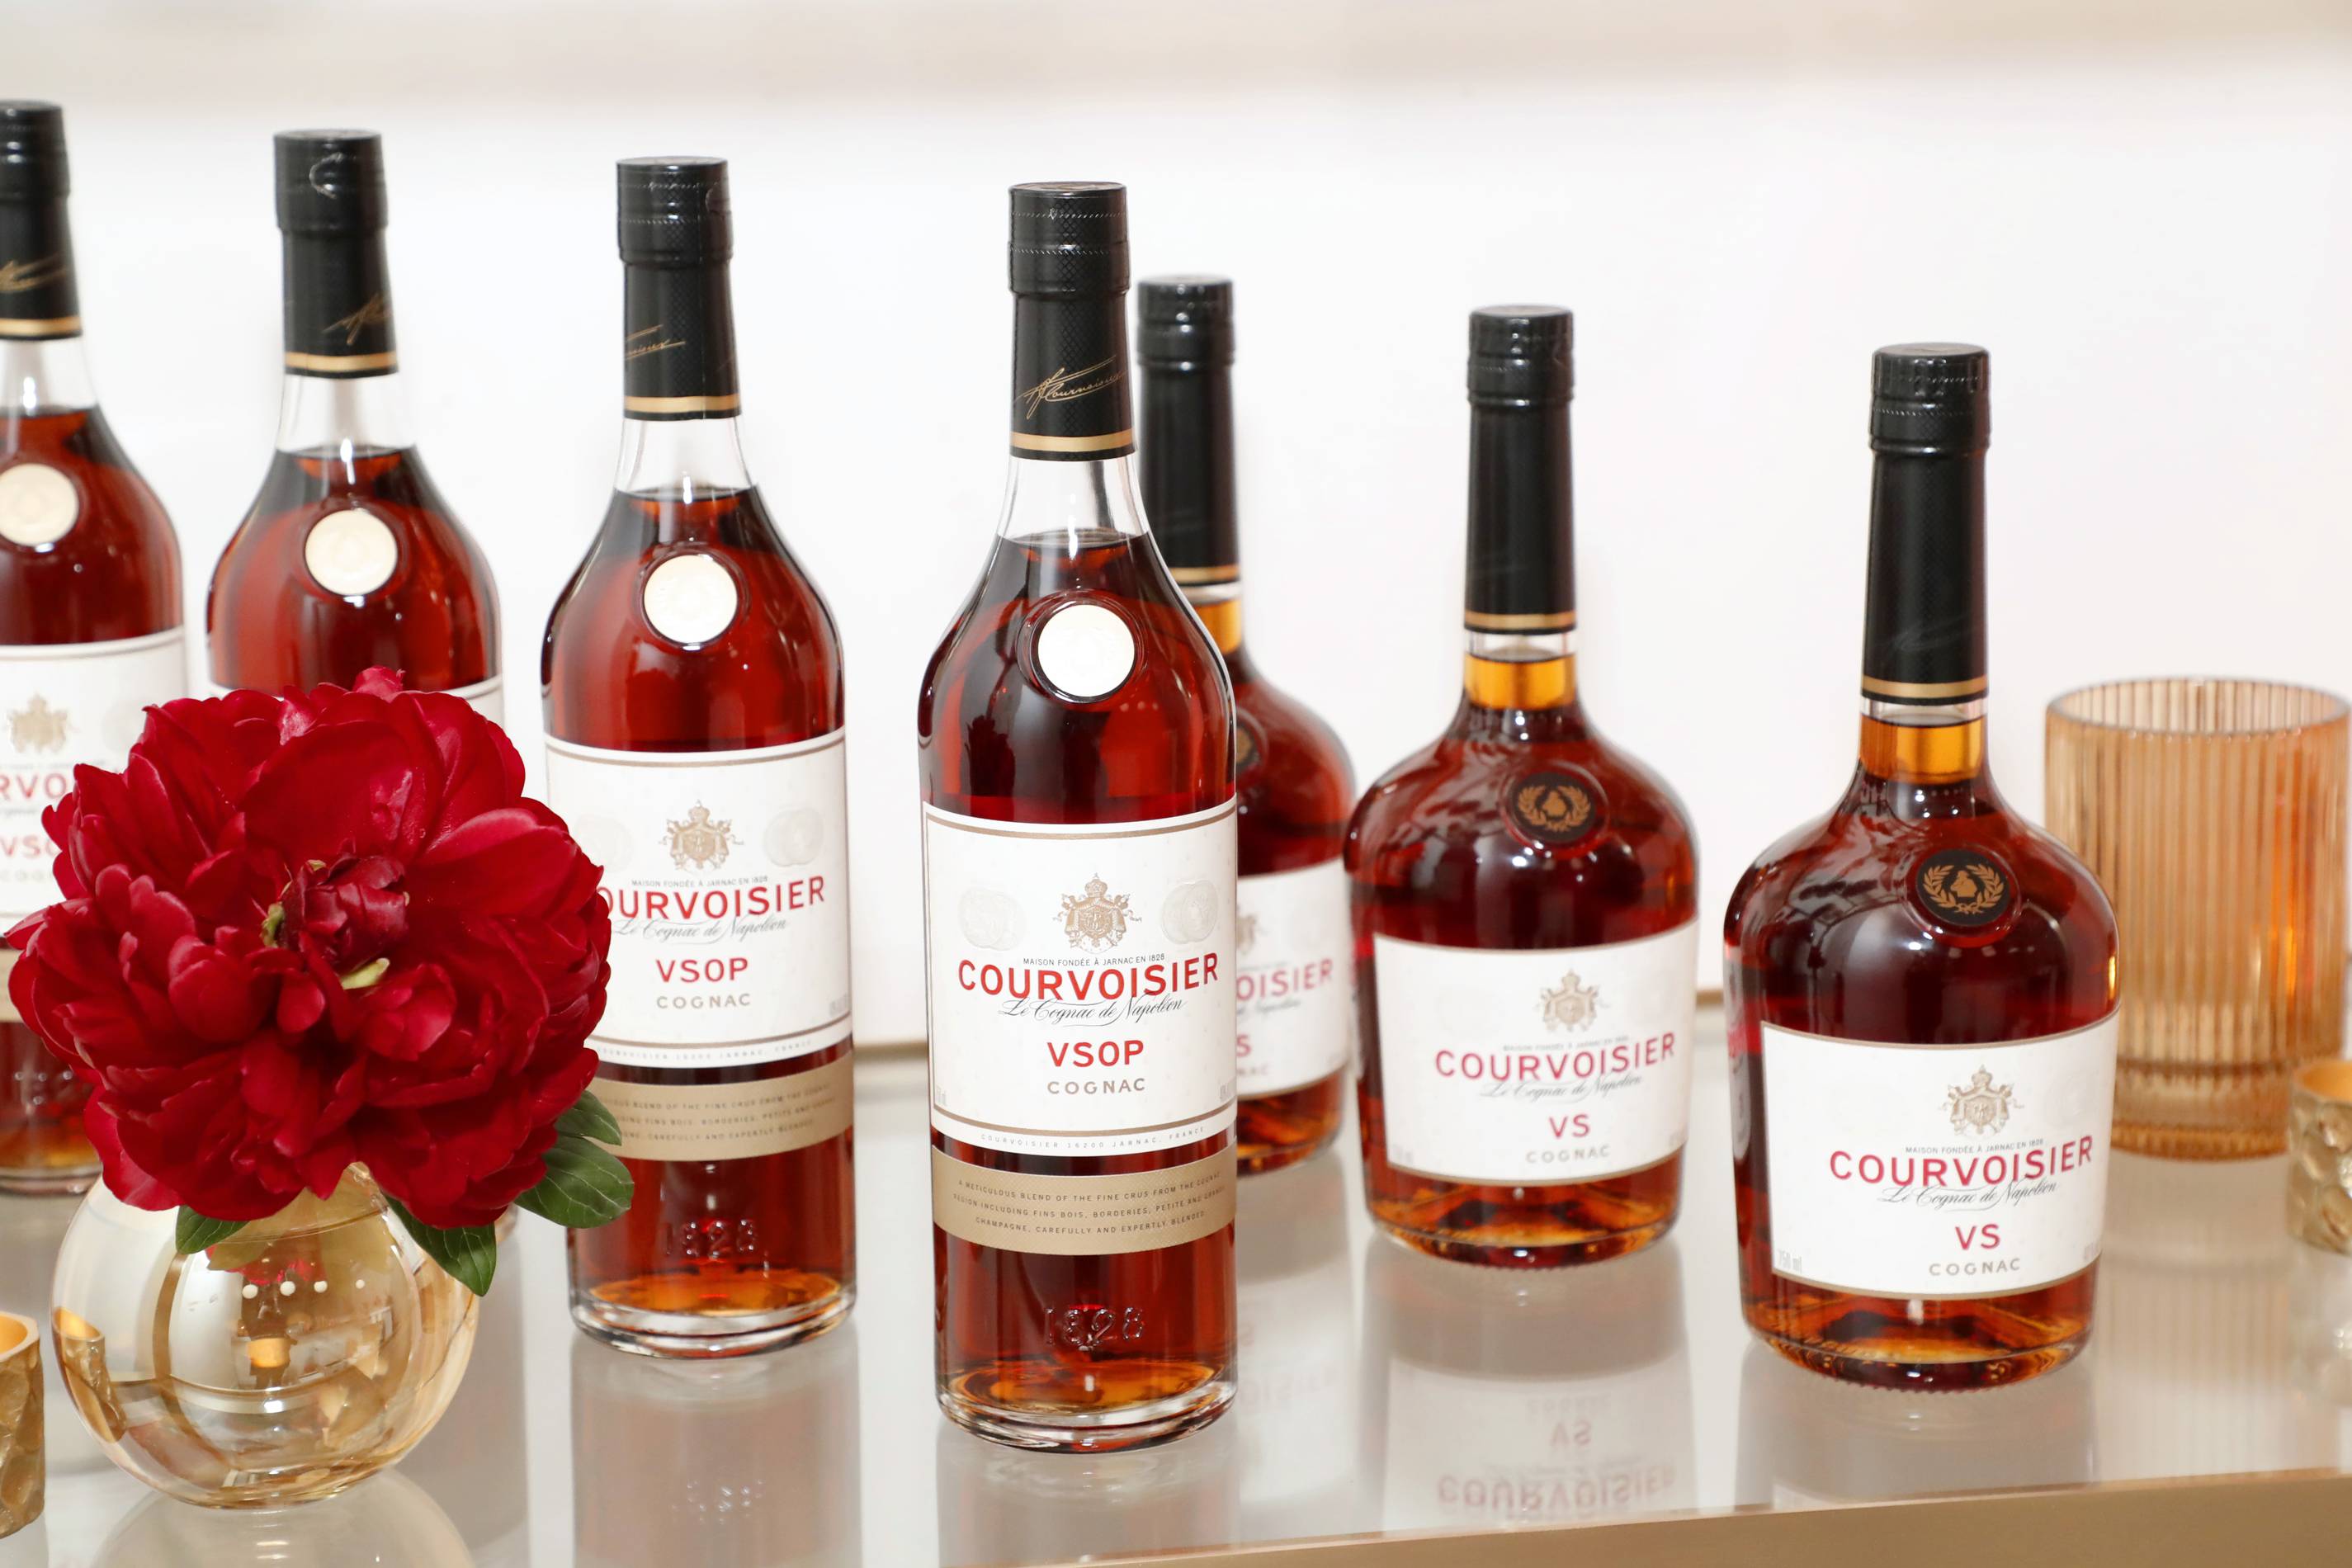 Courvoisier-bottles-roses-Credit-Astrid-Stawiarz-Getty-Images.jpg